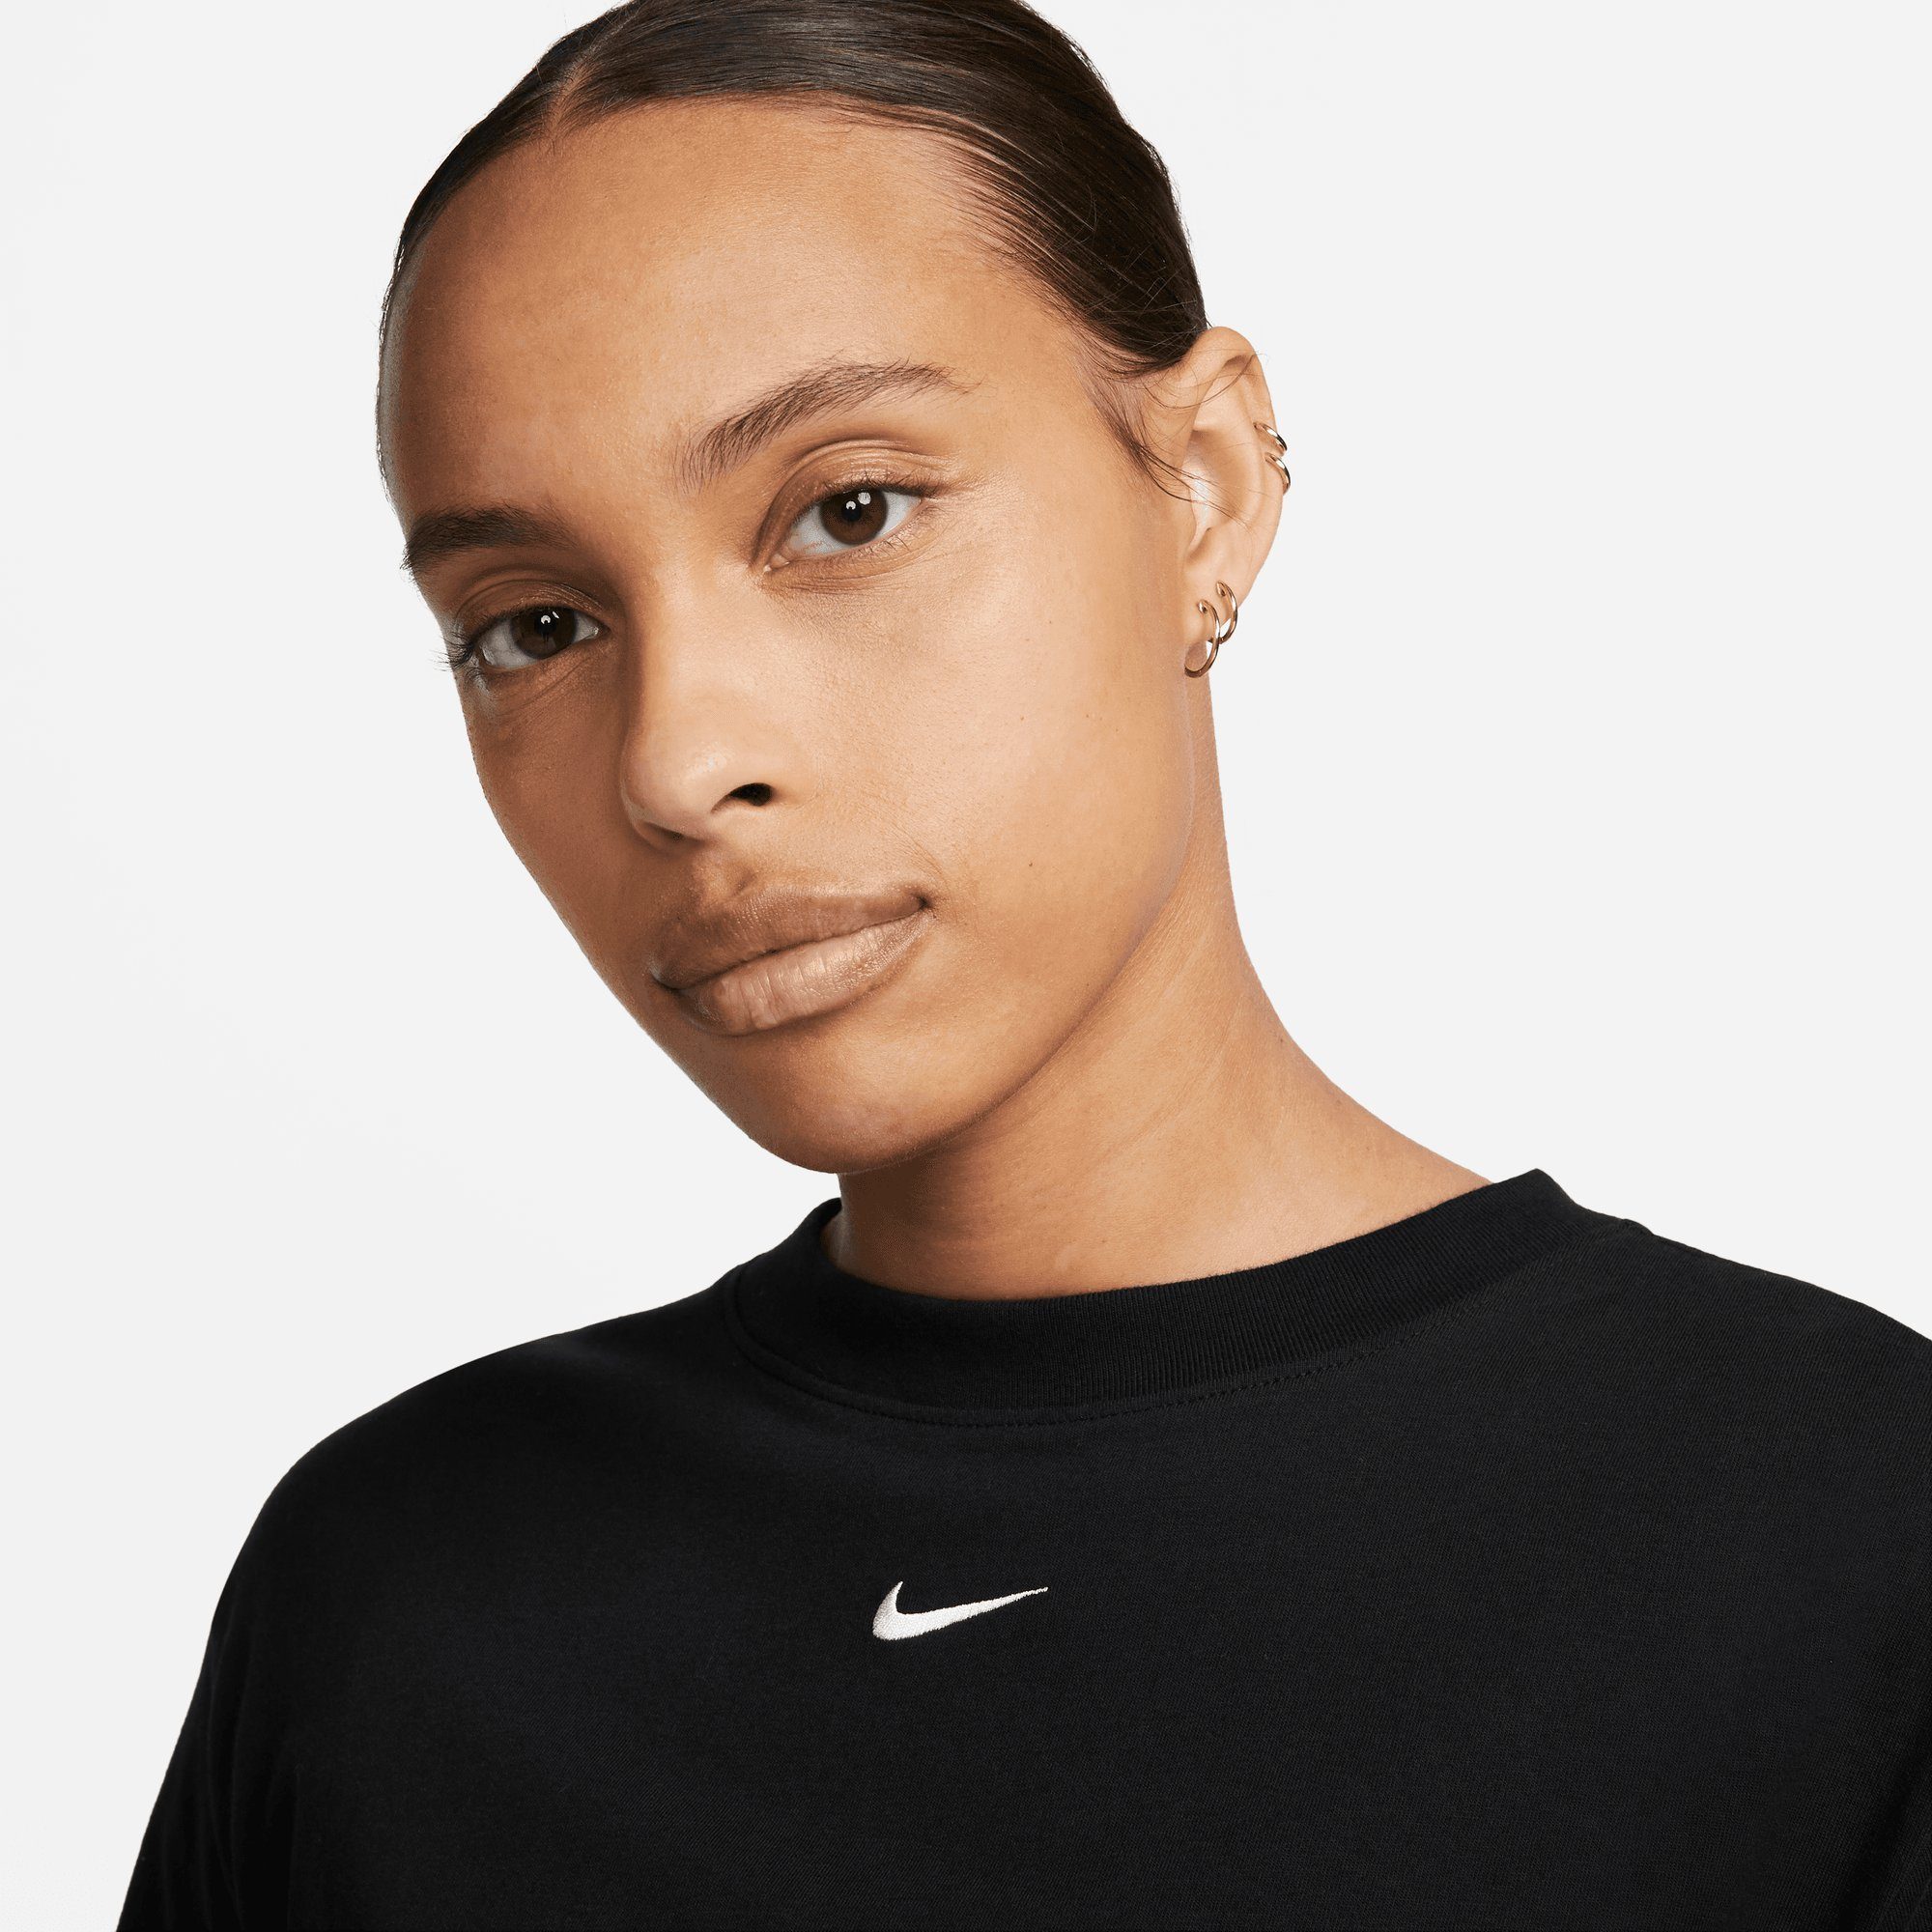 Nike Sportswear BLACK/WHITE ESSENTIAL WOMEN'S DRESS SHORT-SLEEVE Sommerkleid